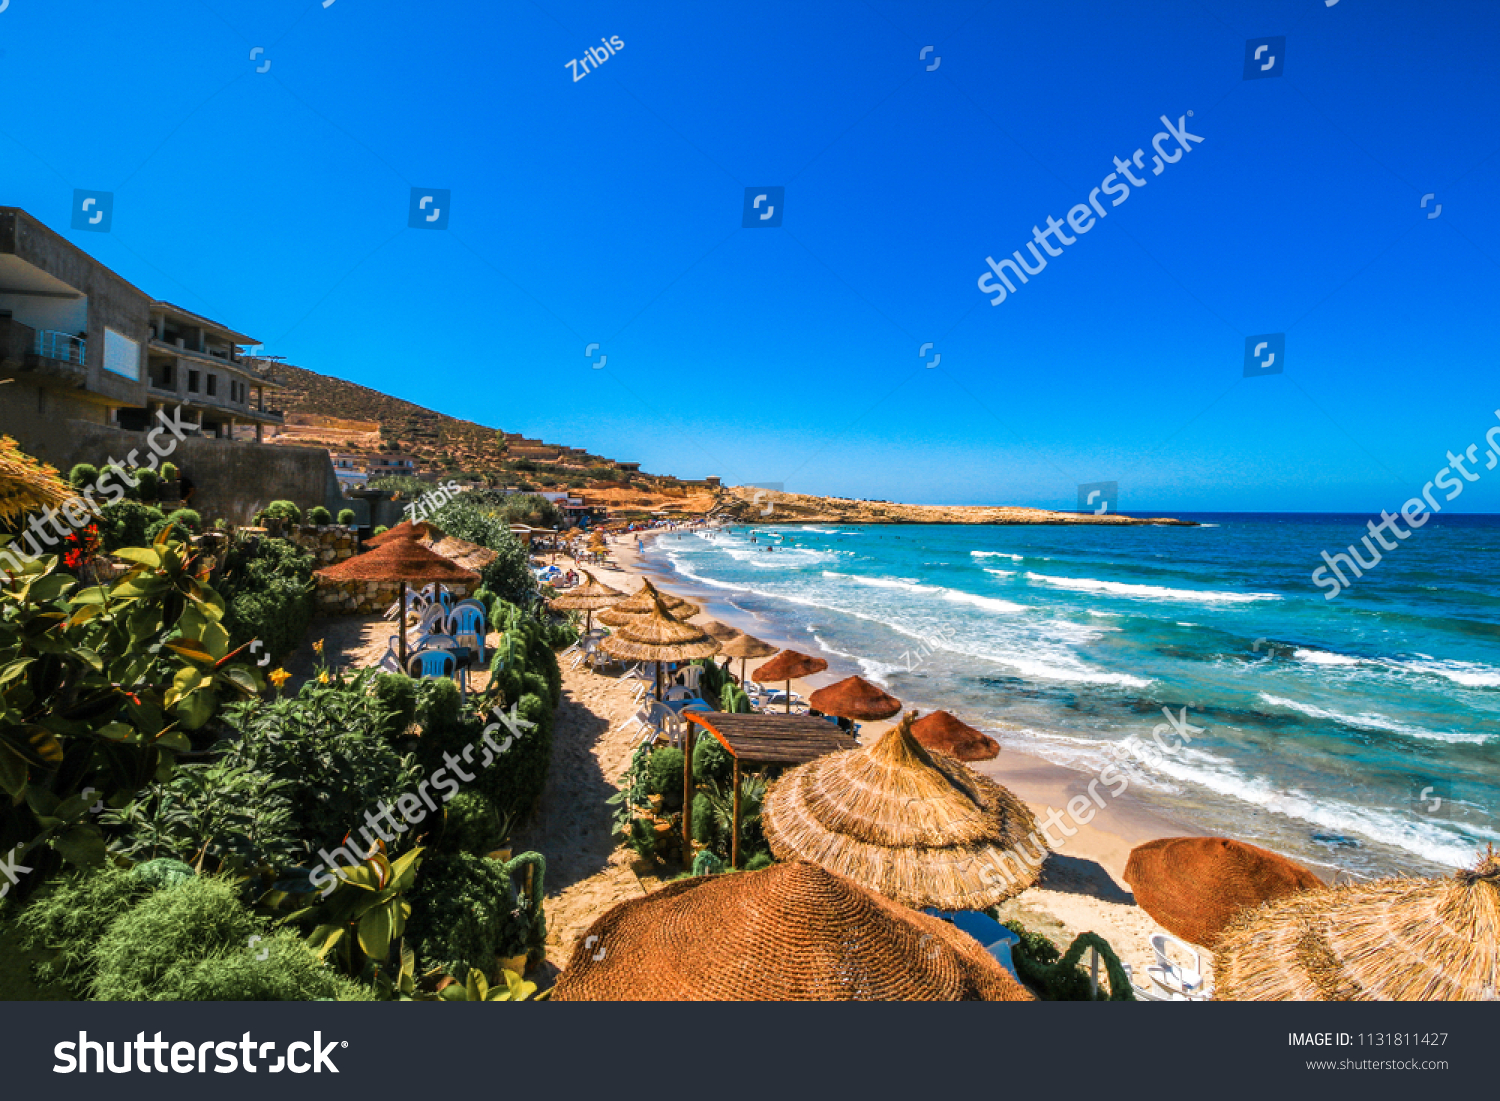 Wonderful landscape of the Tunisian beach. Taken at Hammamet, Tunisia.
Wonderful destination for vacations! #1131811427